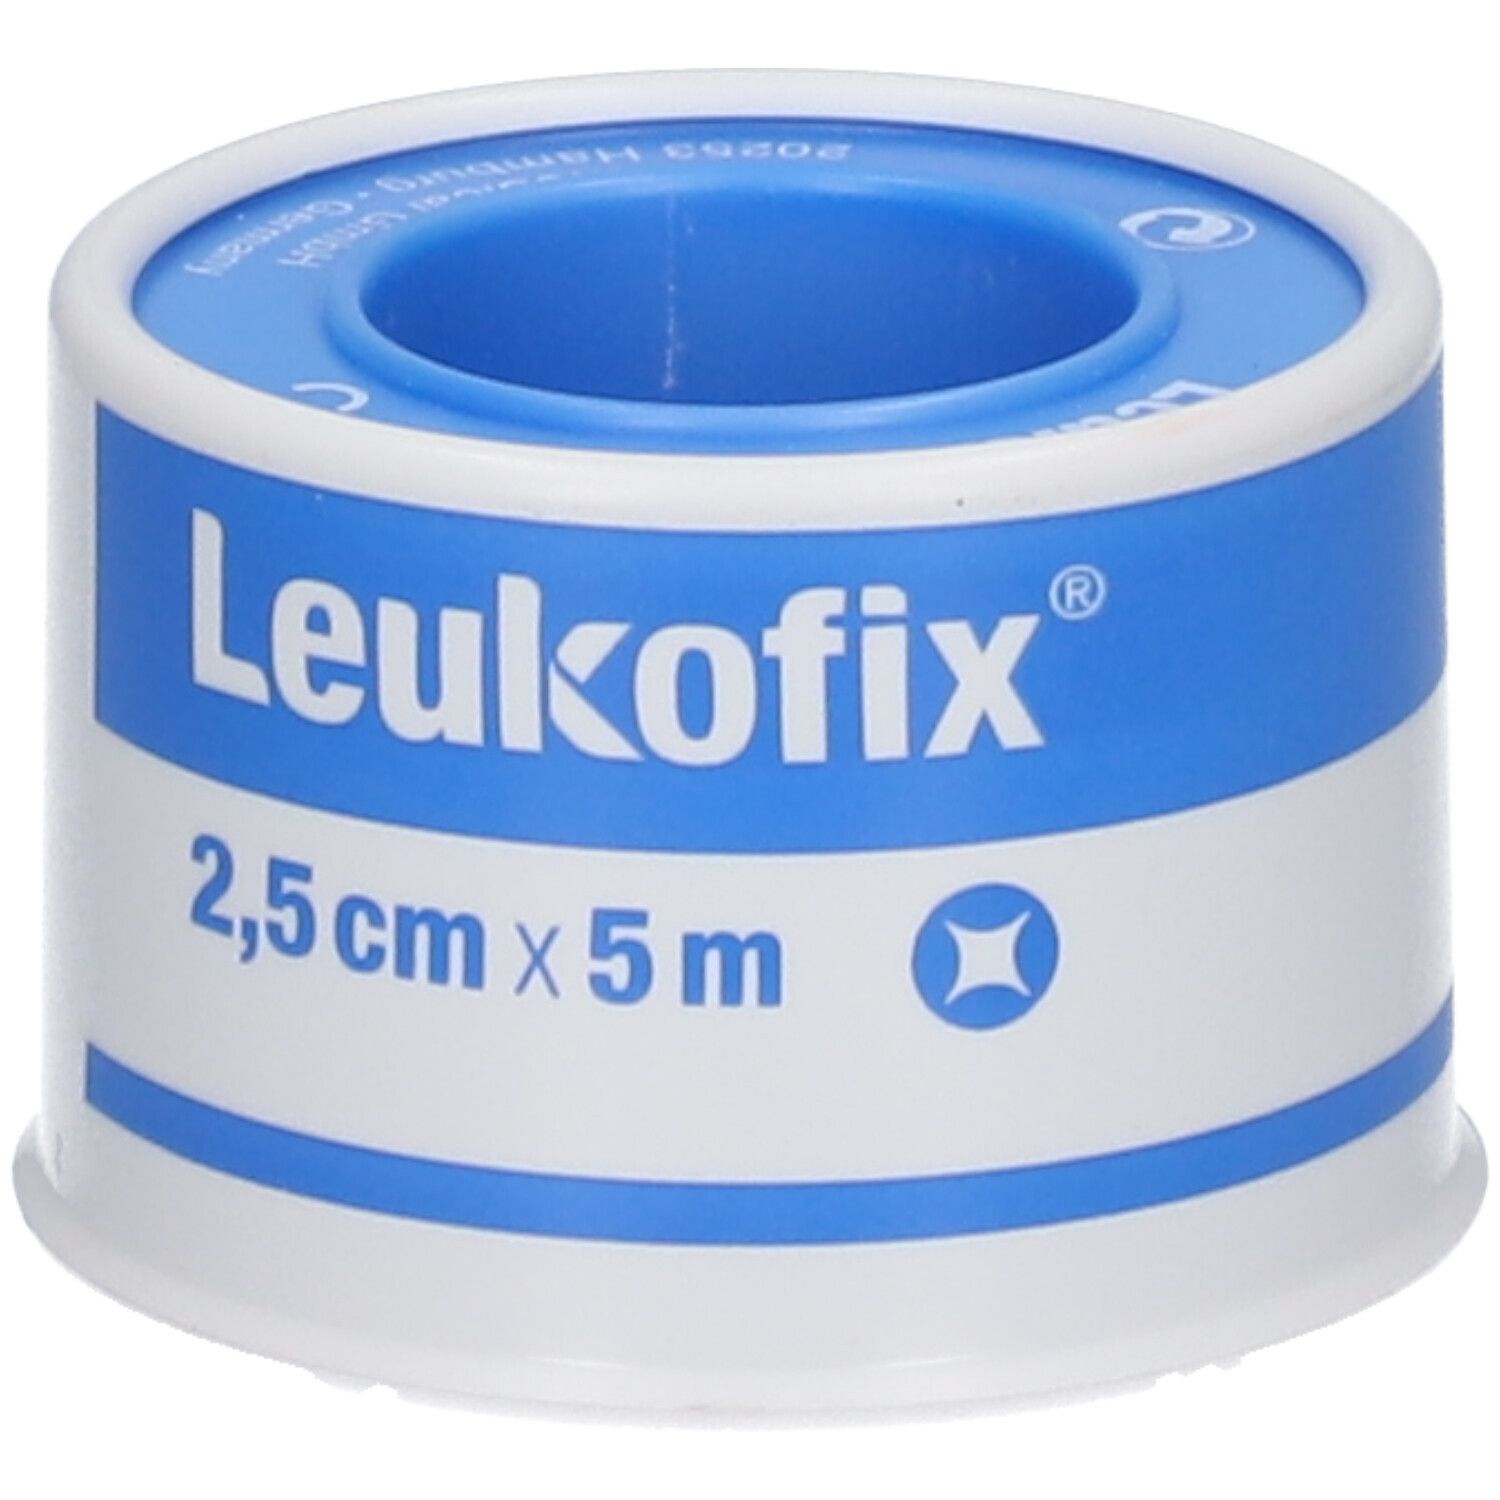 Leukofix Cerotto Adesivo 2.5cm x 5m